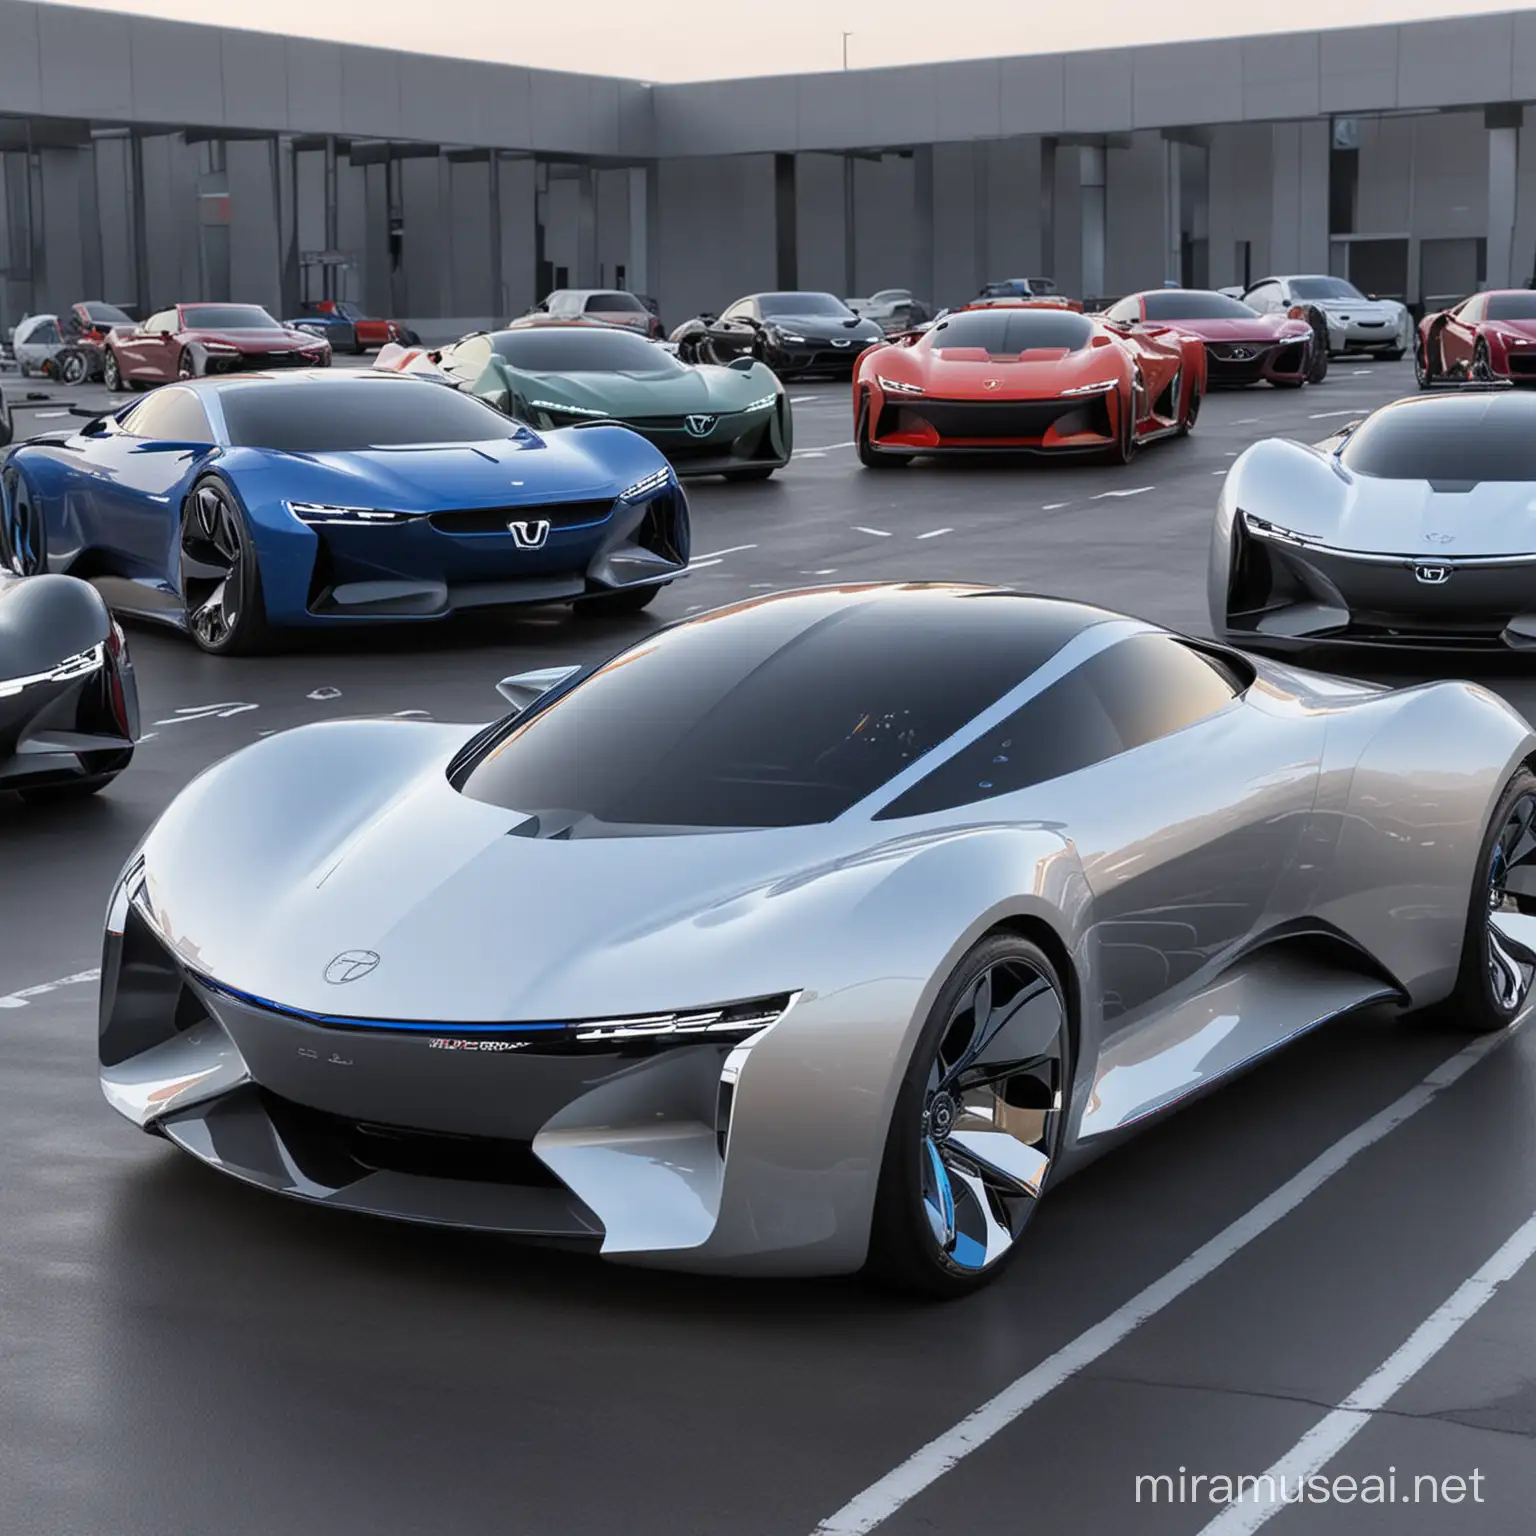 Futuristic Concept Cars Racing on Neonlit Urban Highways